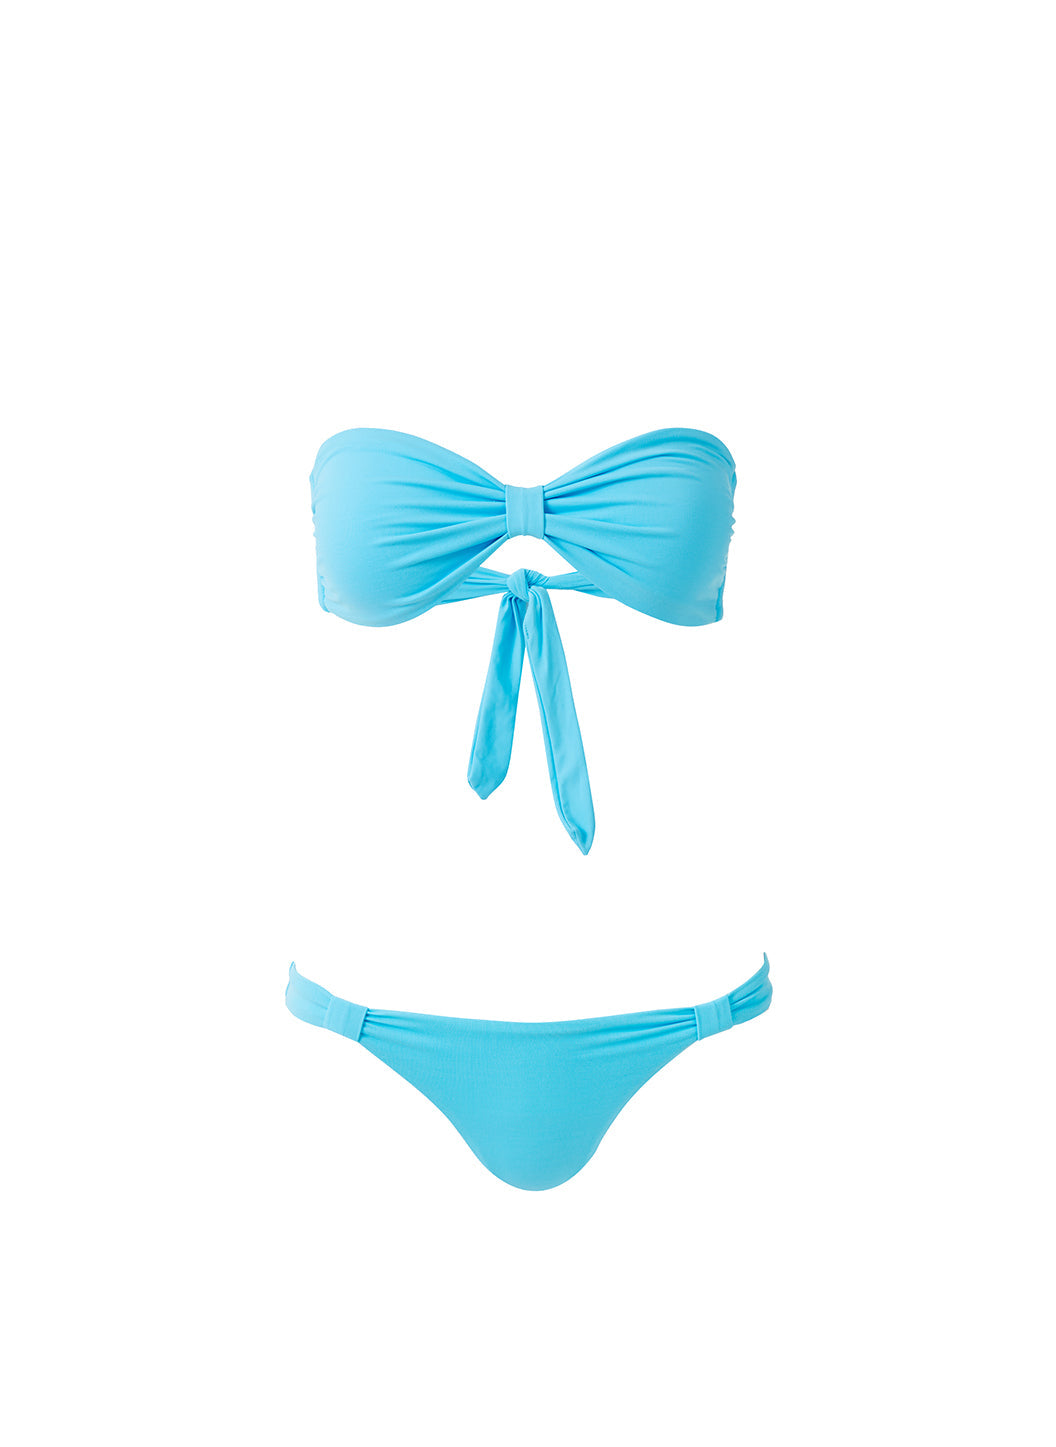 stockholm-turquoise-bikini_cutout